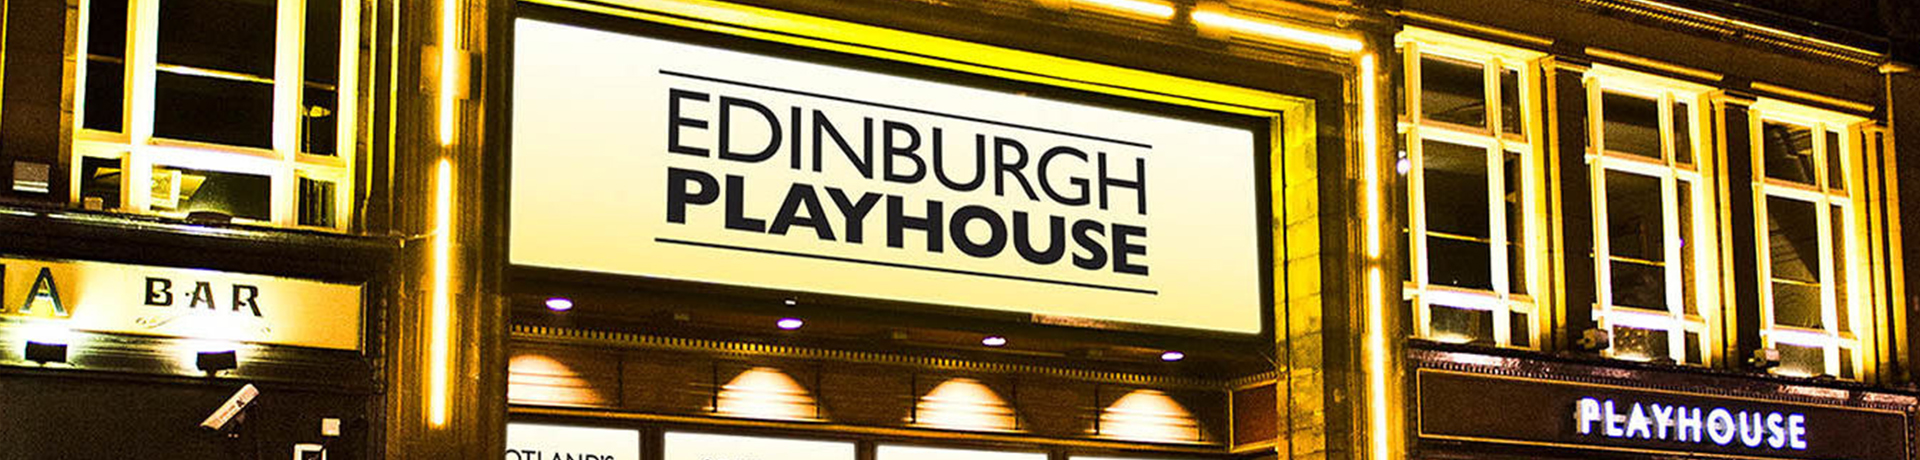 Room Information - Edinburgh Playhouse